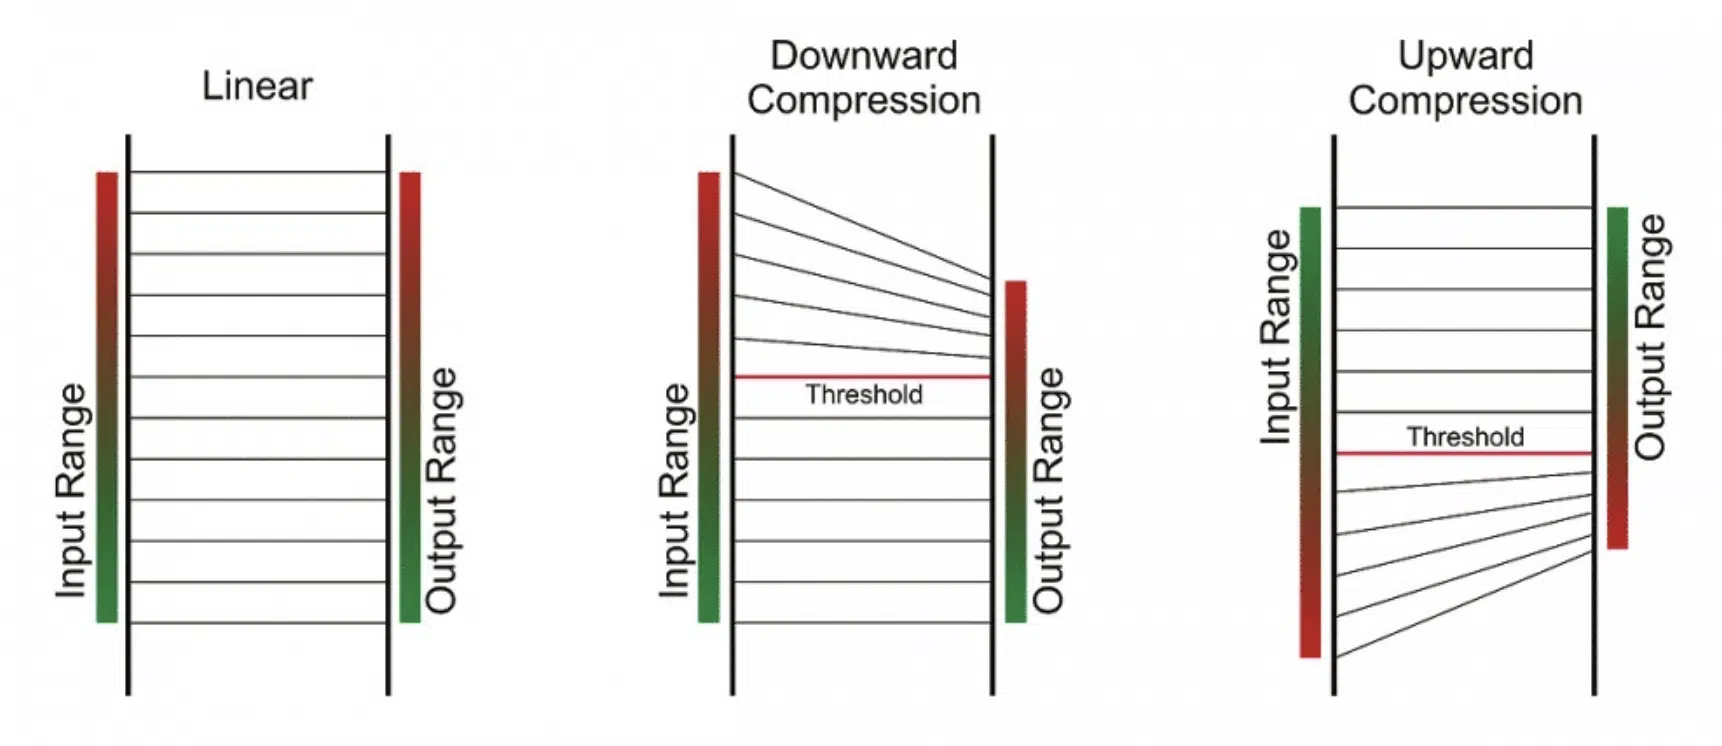 UpwardDownward compresion - Unison